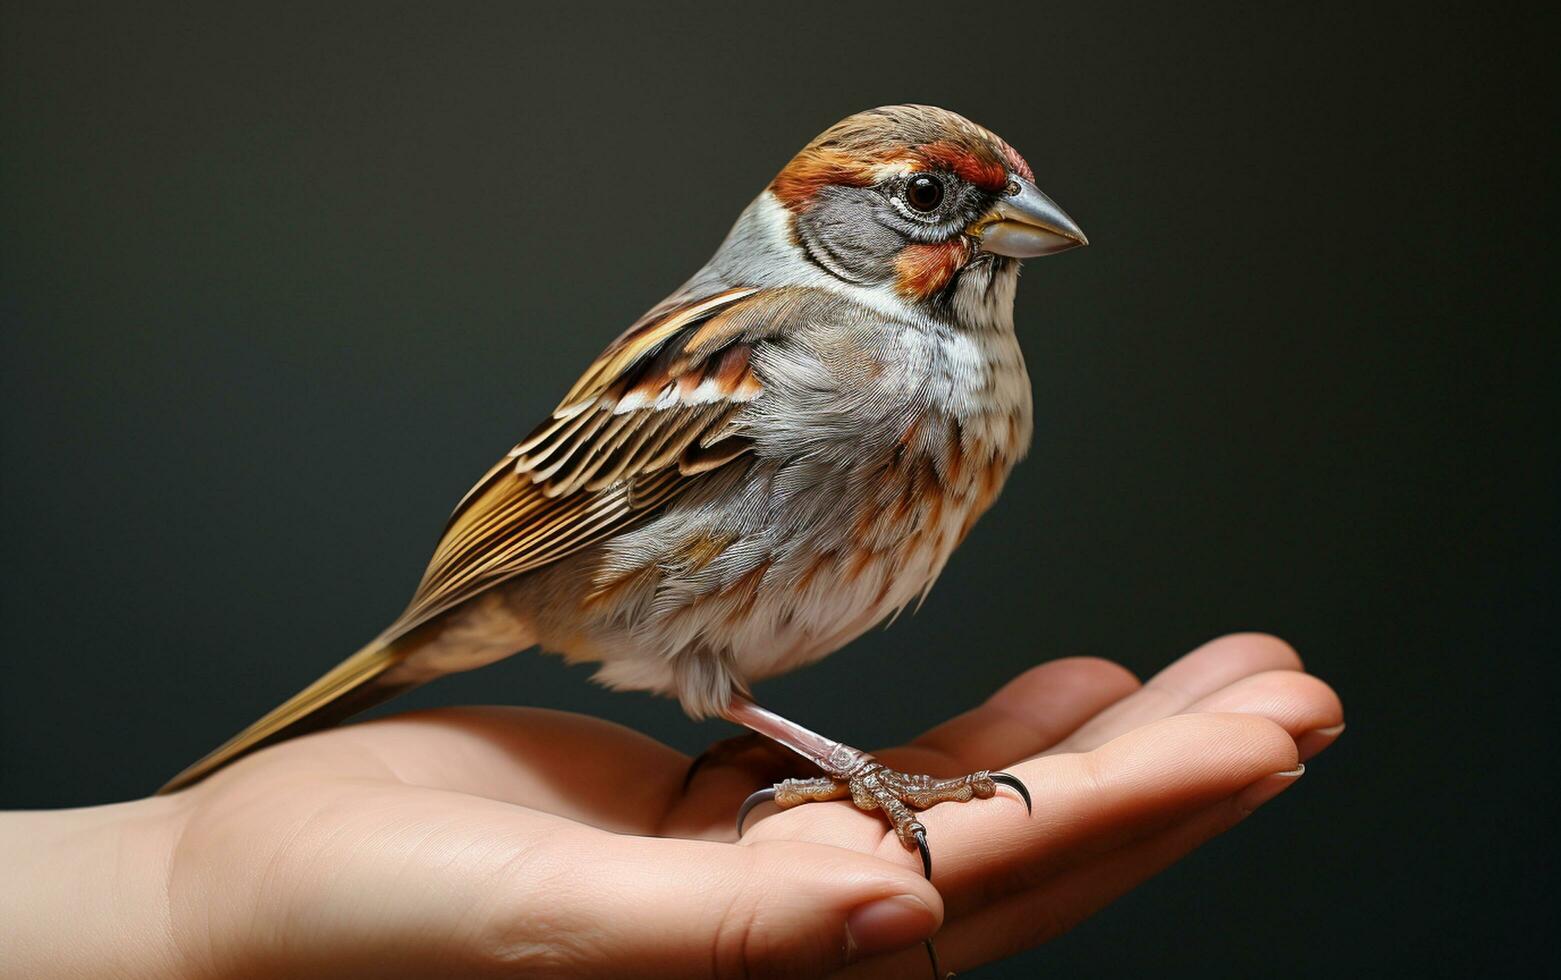 AI Generative cute Sparrow bird on natural environment photo